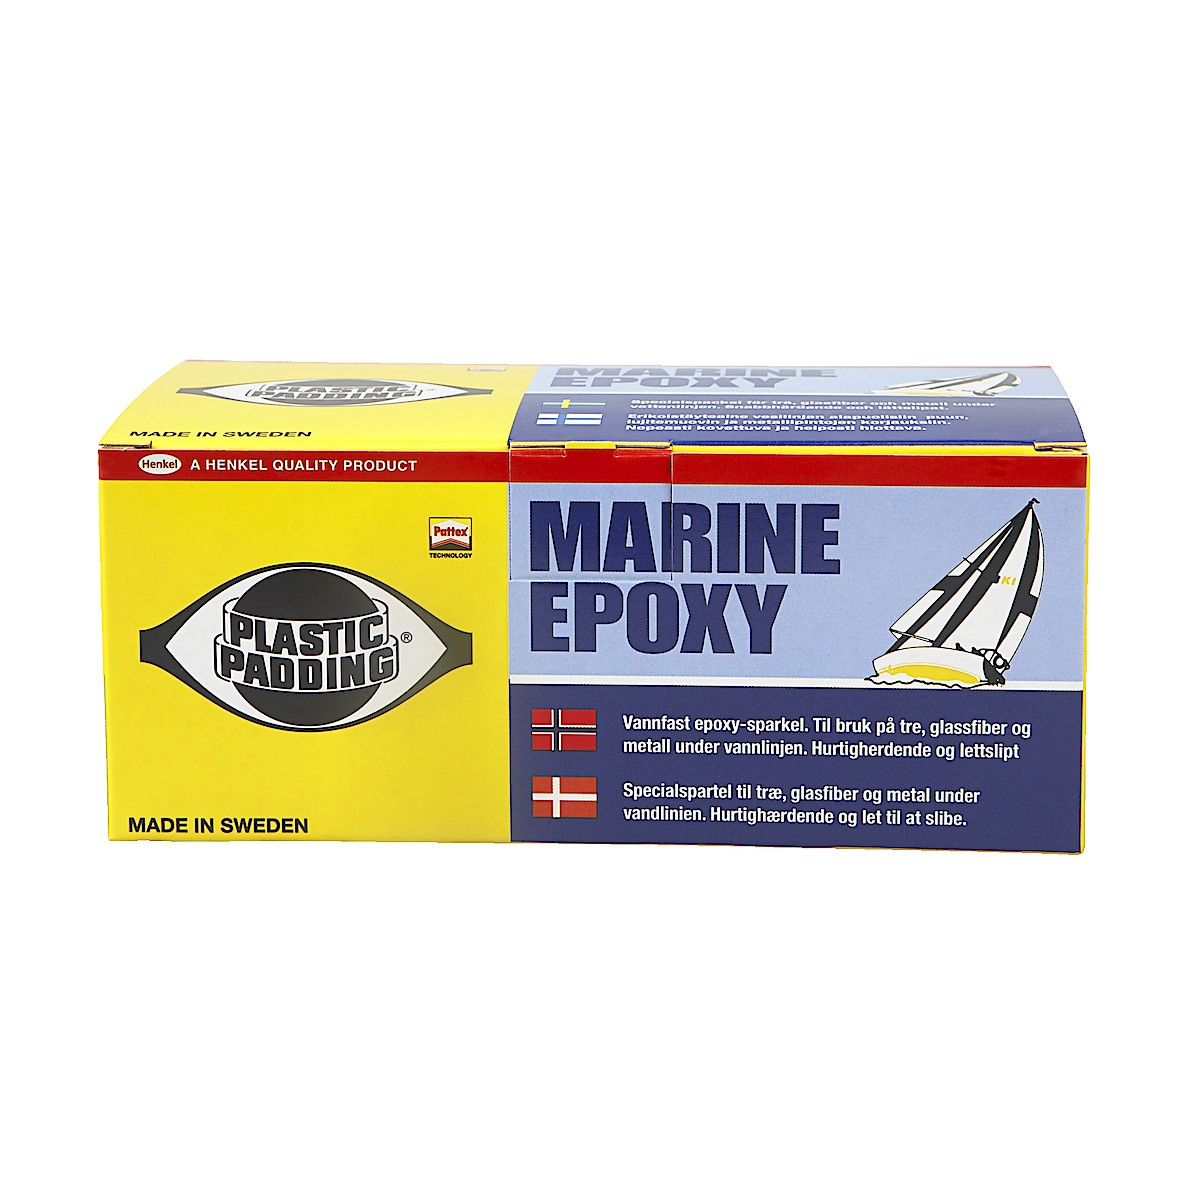 Marine Epoxy Plastic Padding